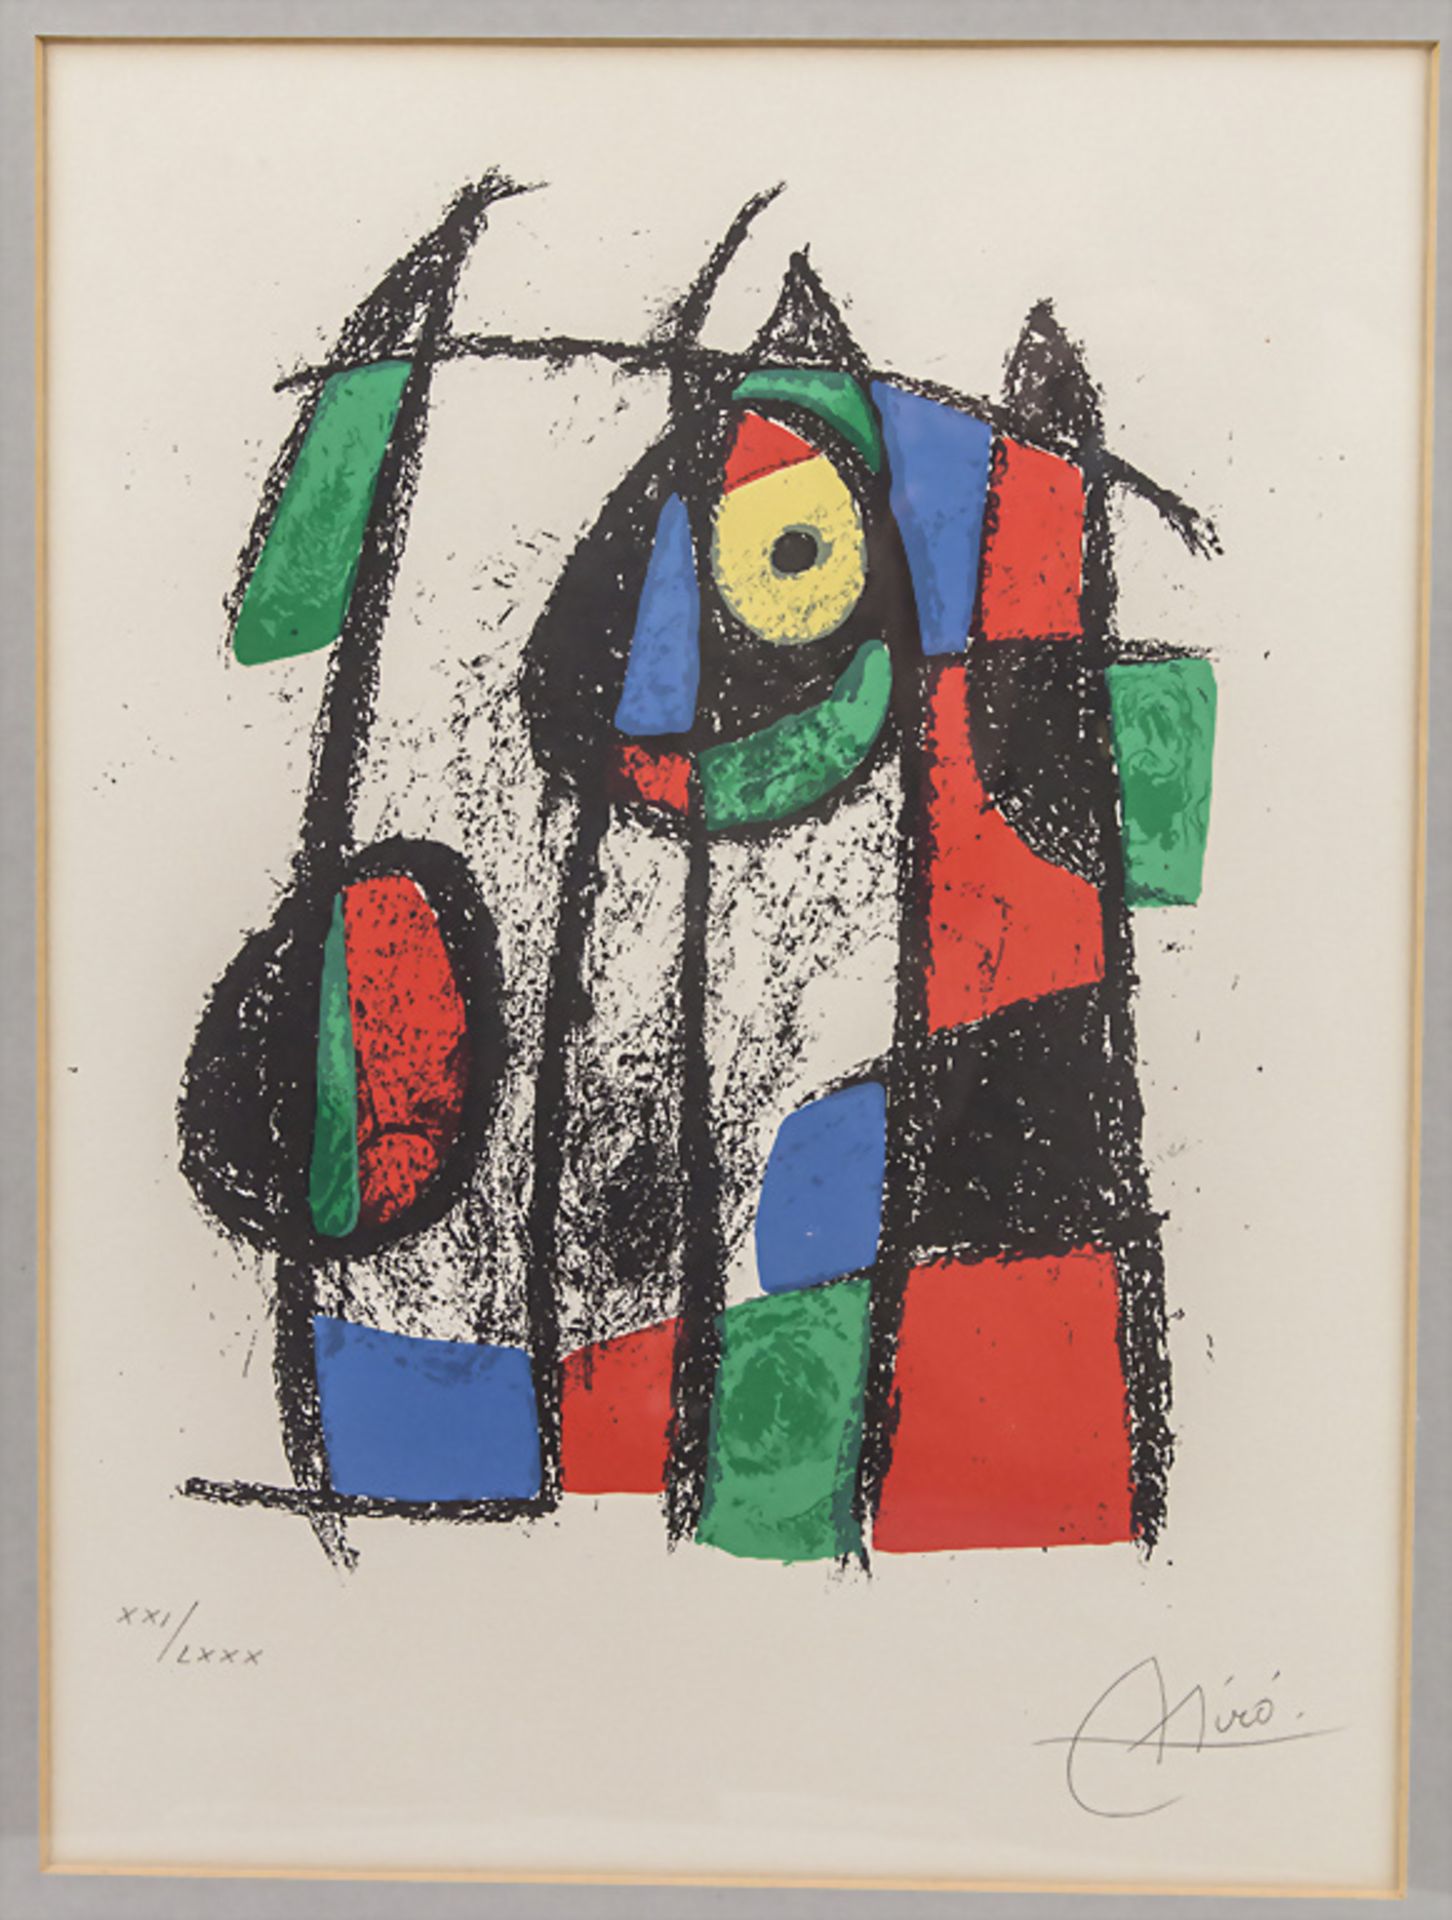 Joan MIRO (1893-1983), 'Komposition' or 'The curious cat', 1975